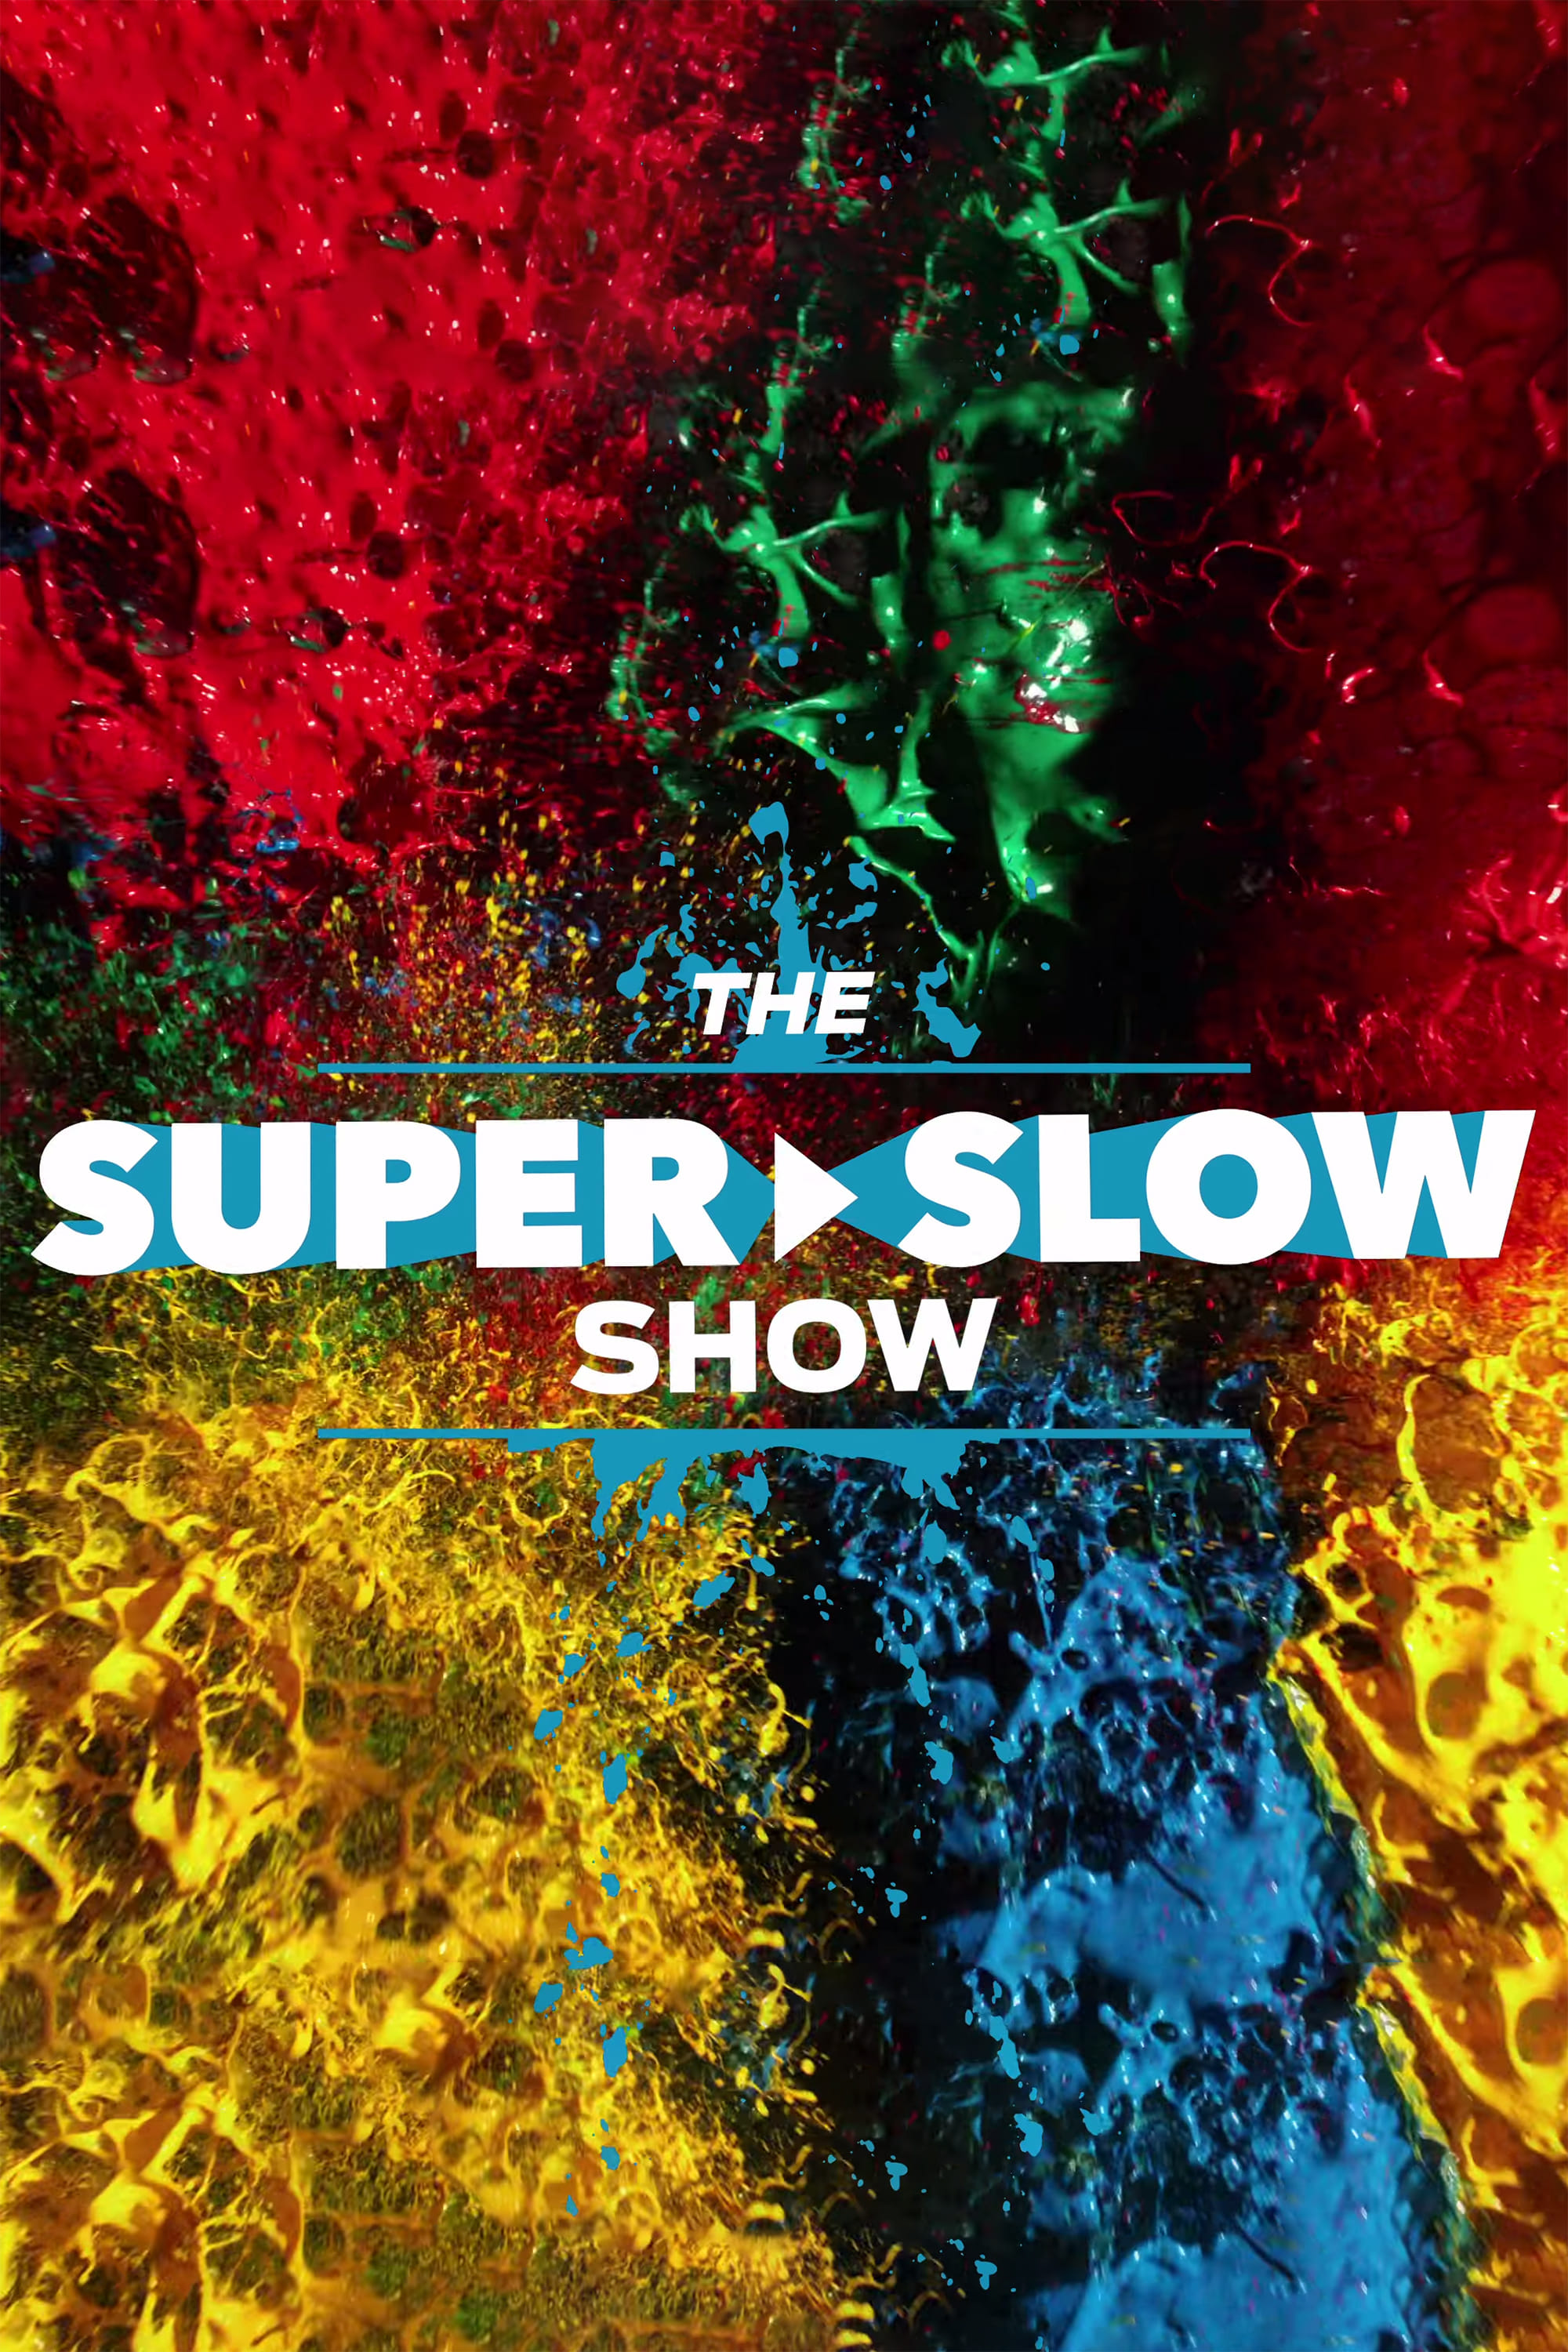 The Super Slow Show